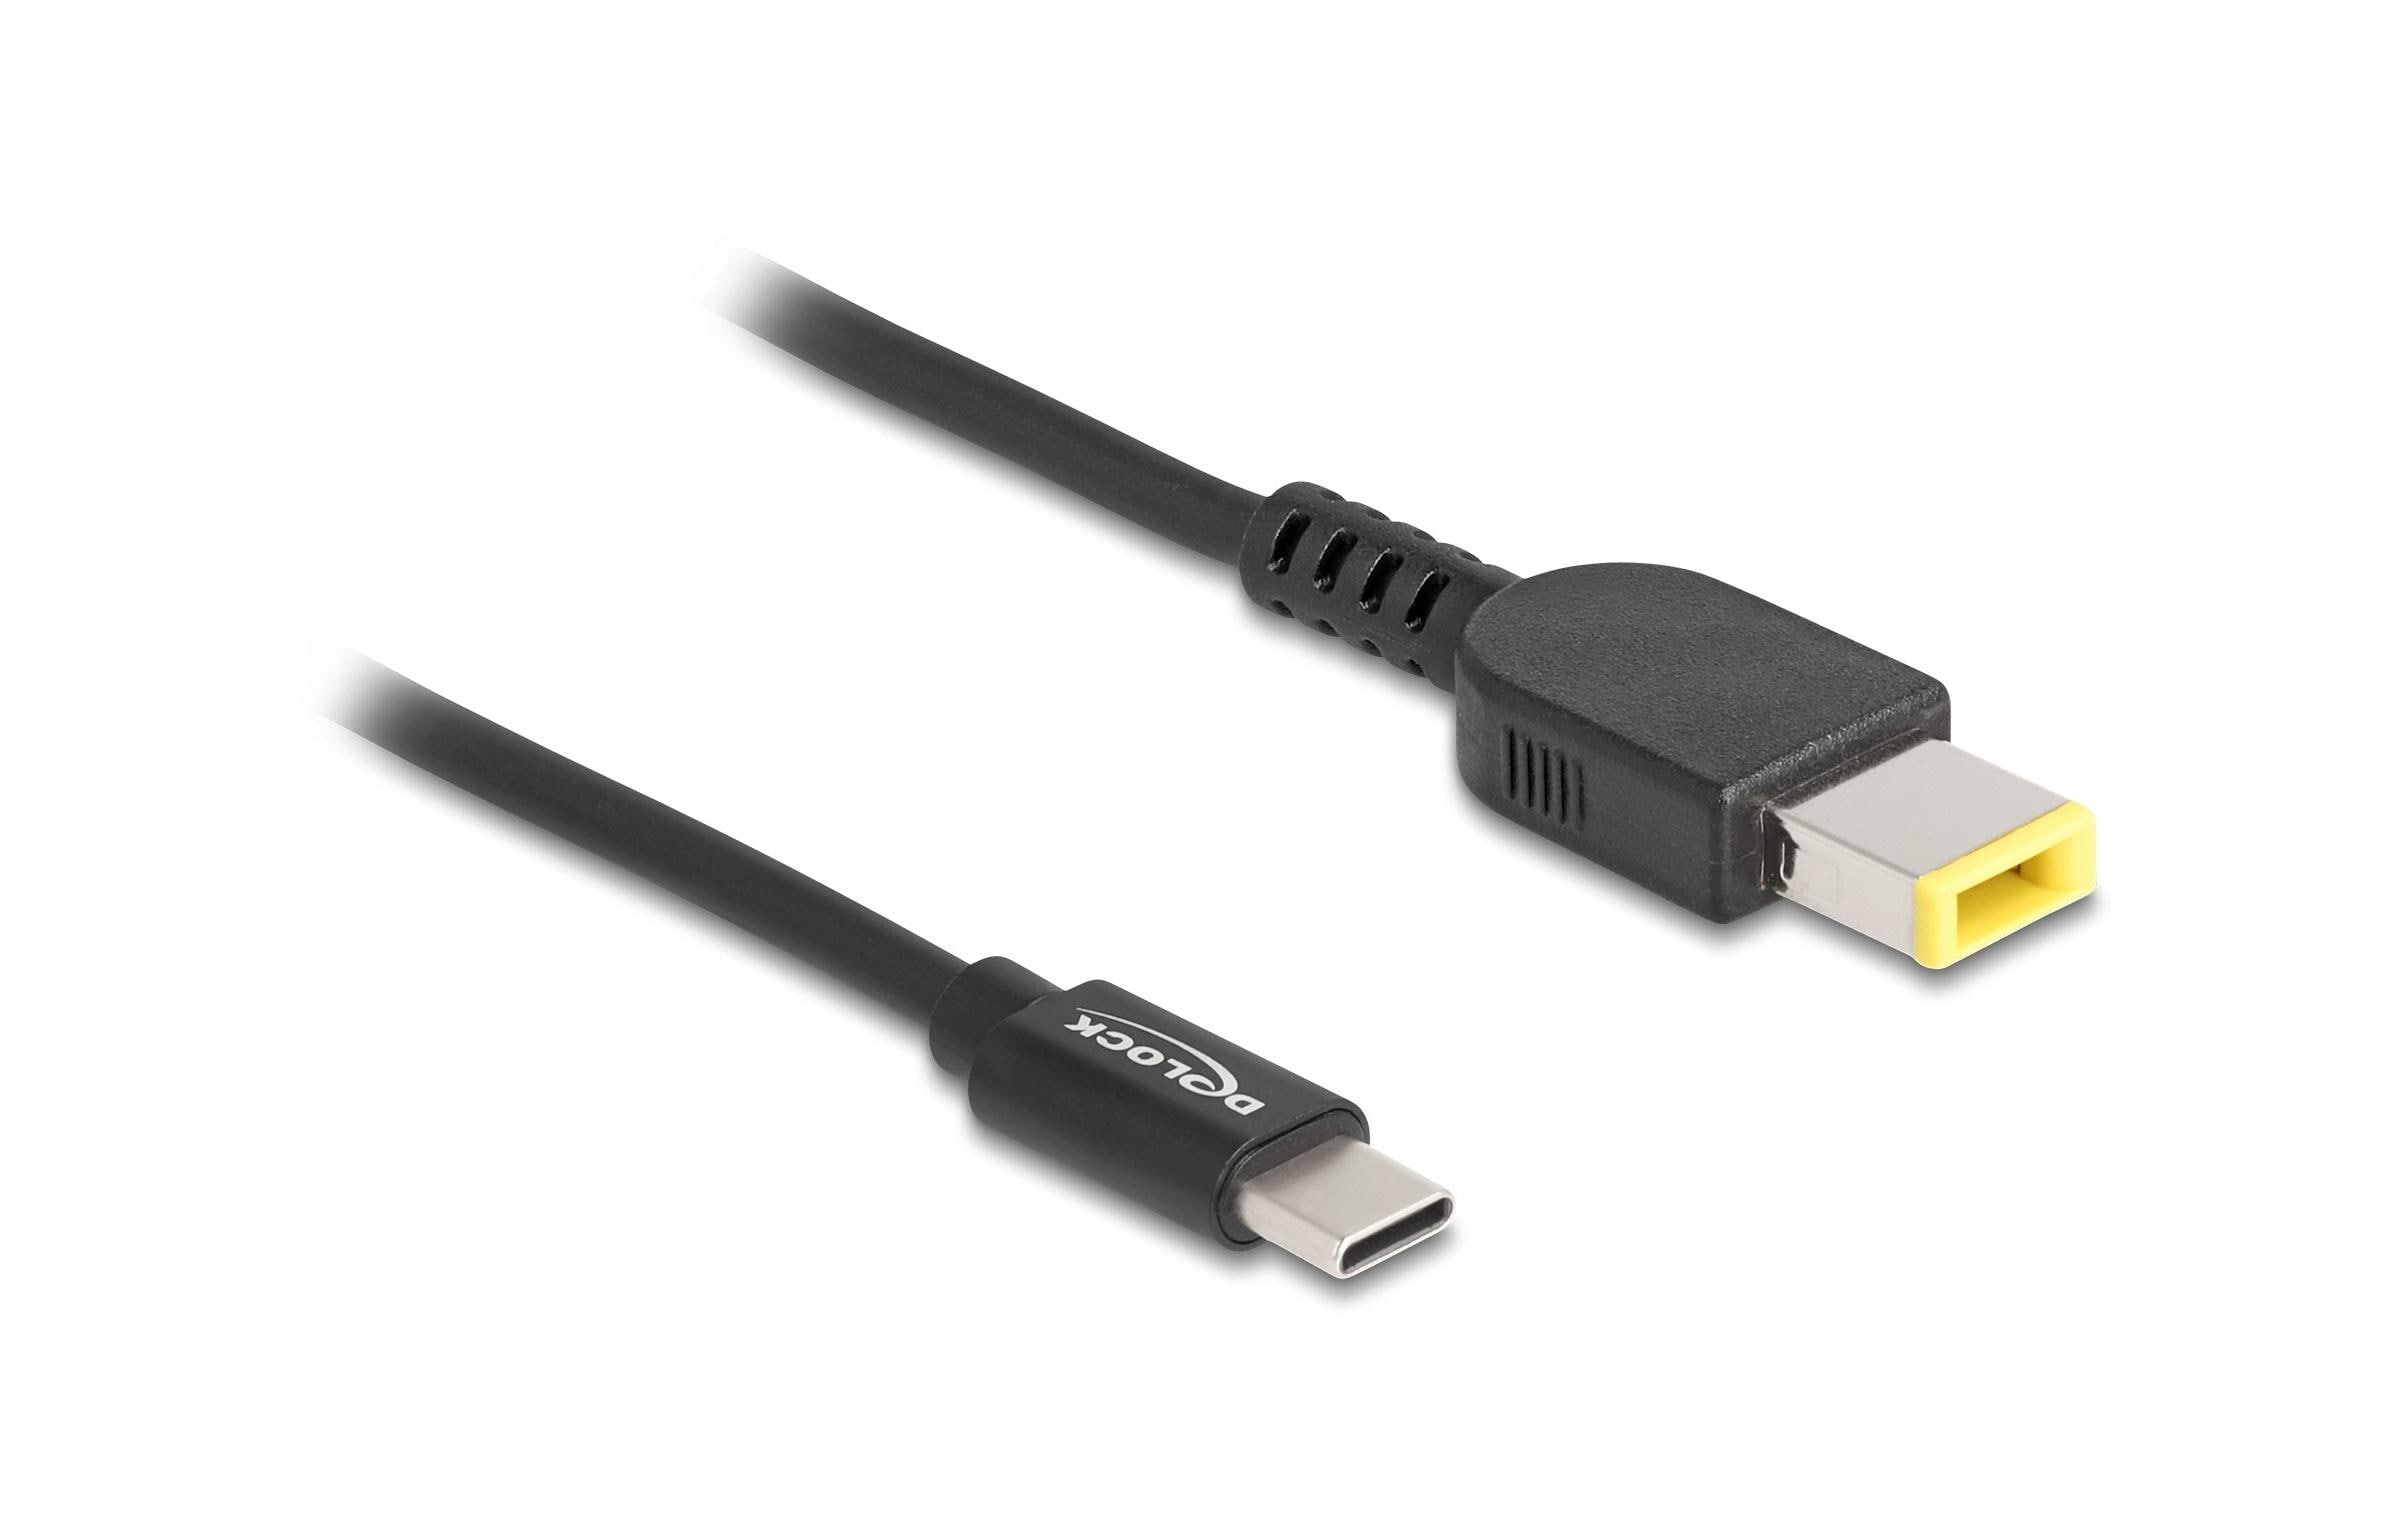 Delock Ladekabel USB-C zu Lenovo 11.0 x 4.5 mm Stecker 1.5 m